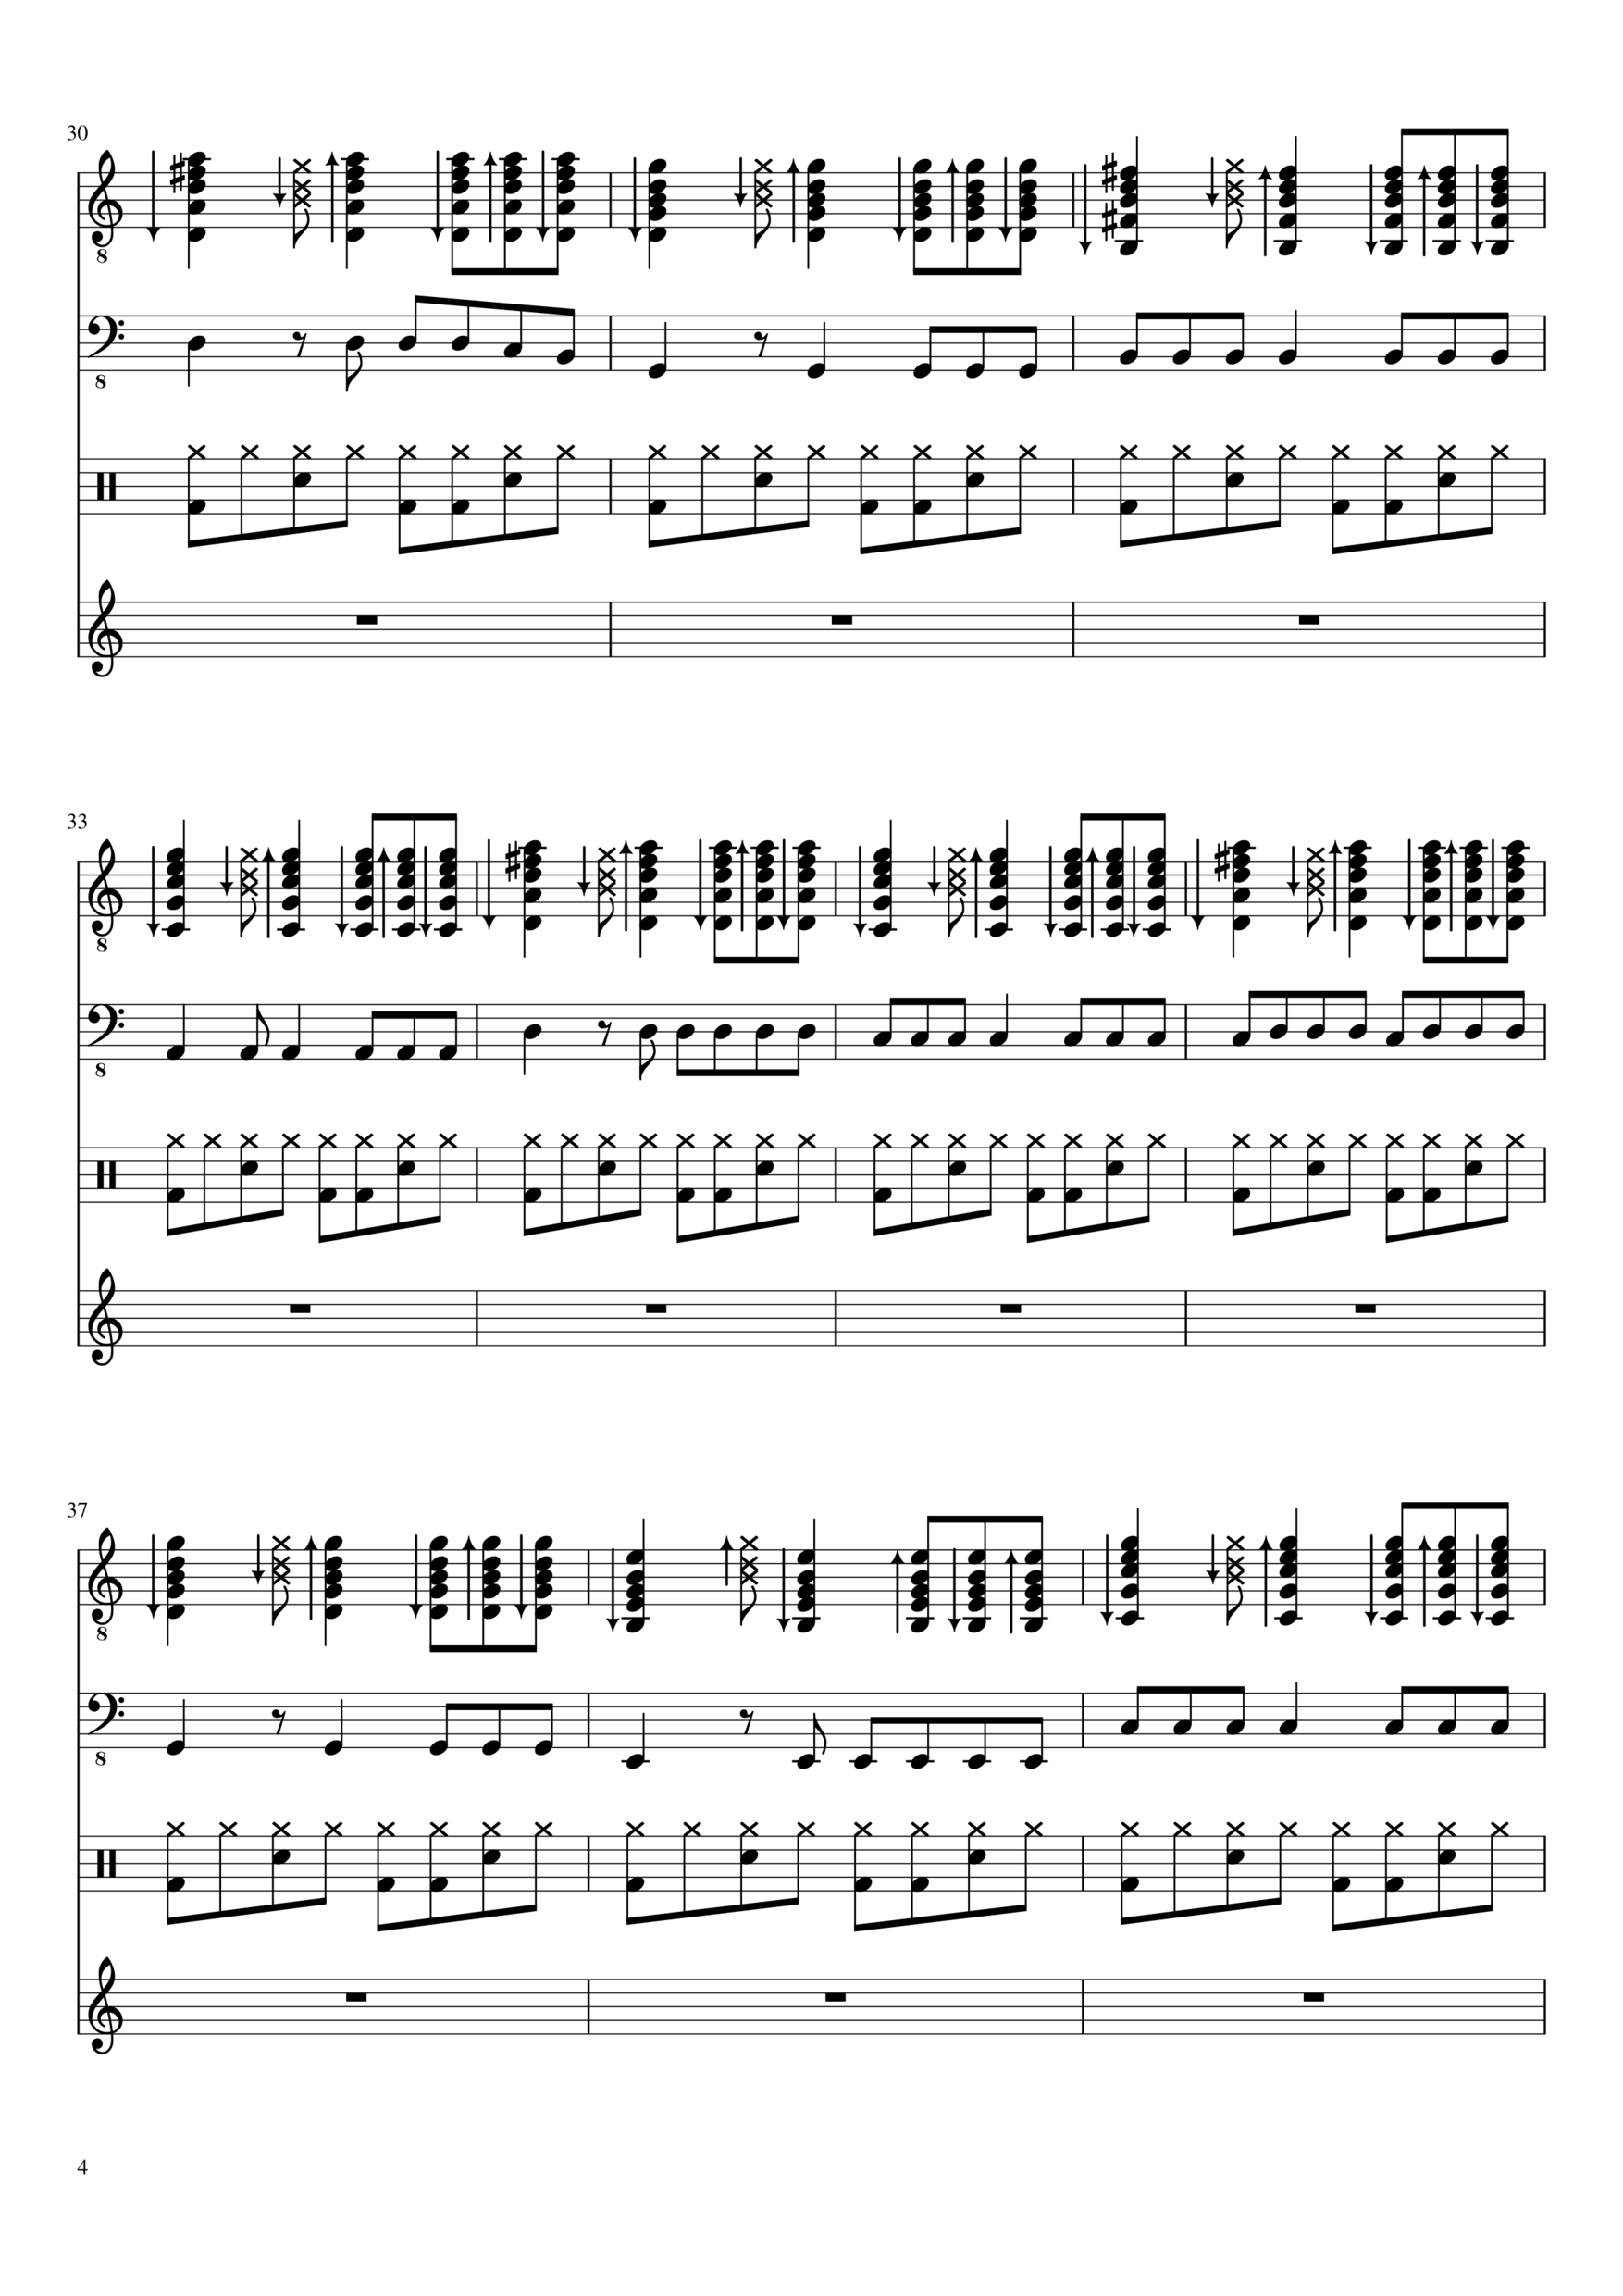 Skvoz dyiru v moey golove slide, Image 4